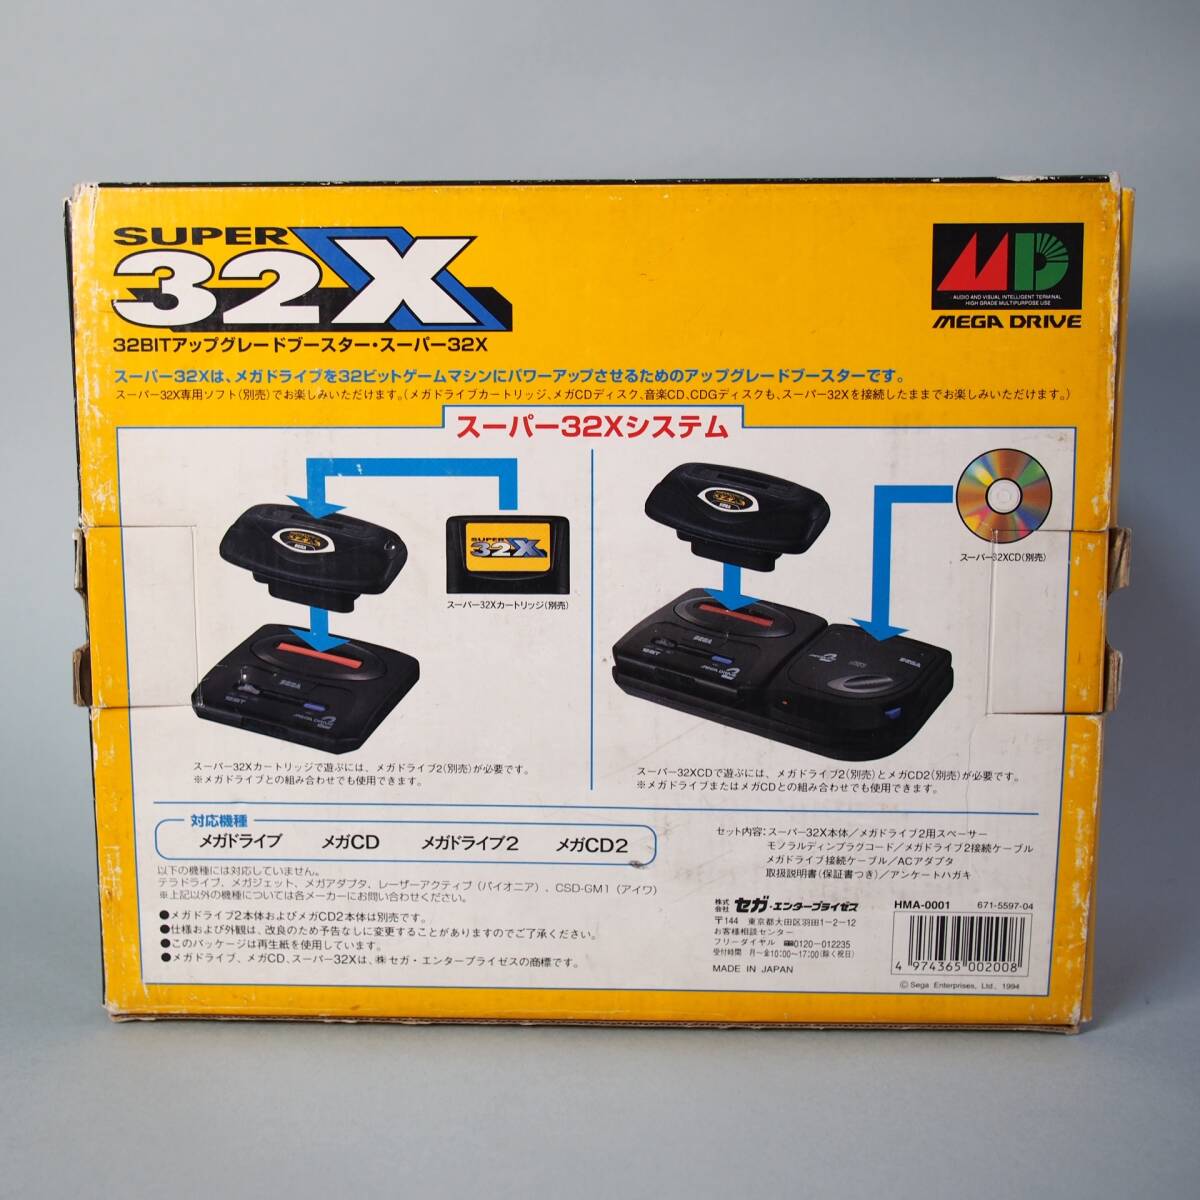  super 32X box attaching Sega Mega Drive operation verification settled SUPER 32X SEGA MEGA DRIVE B5